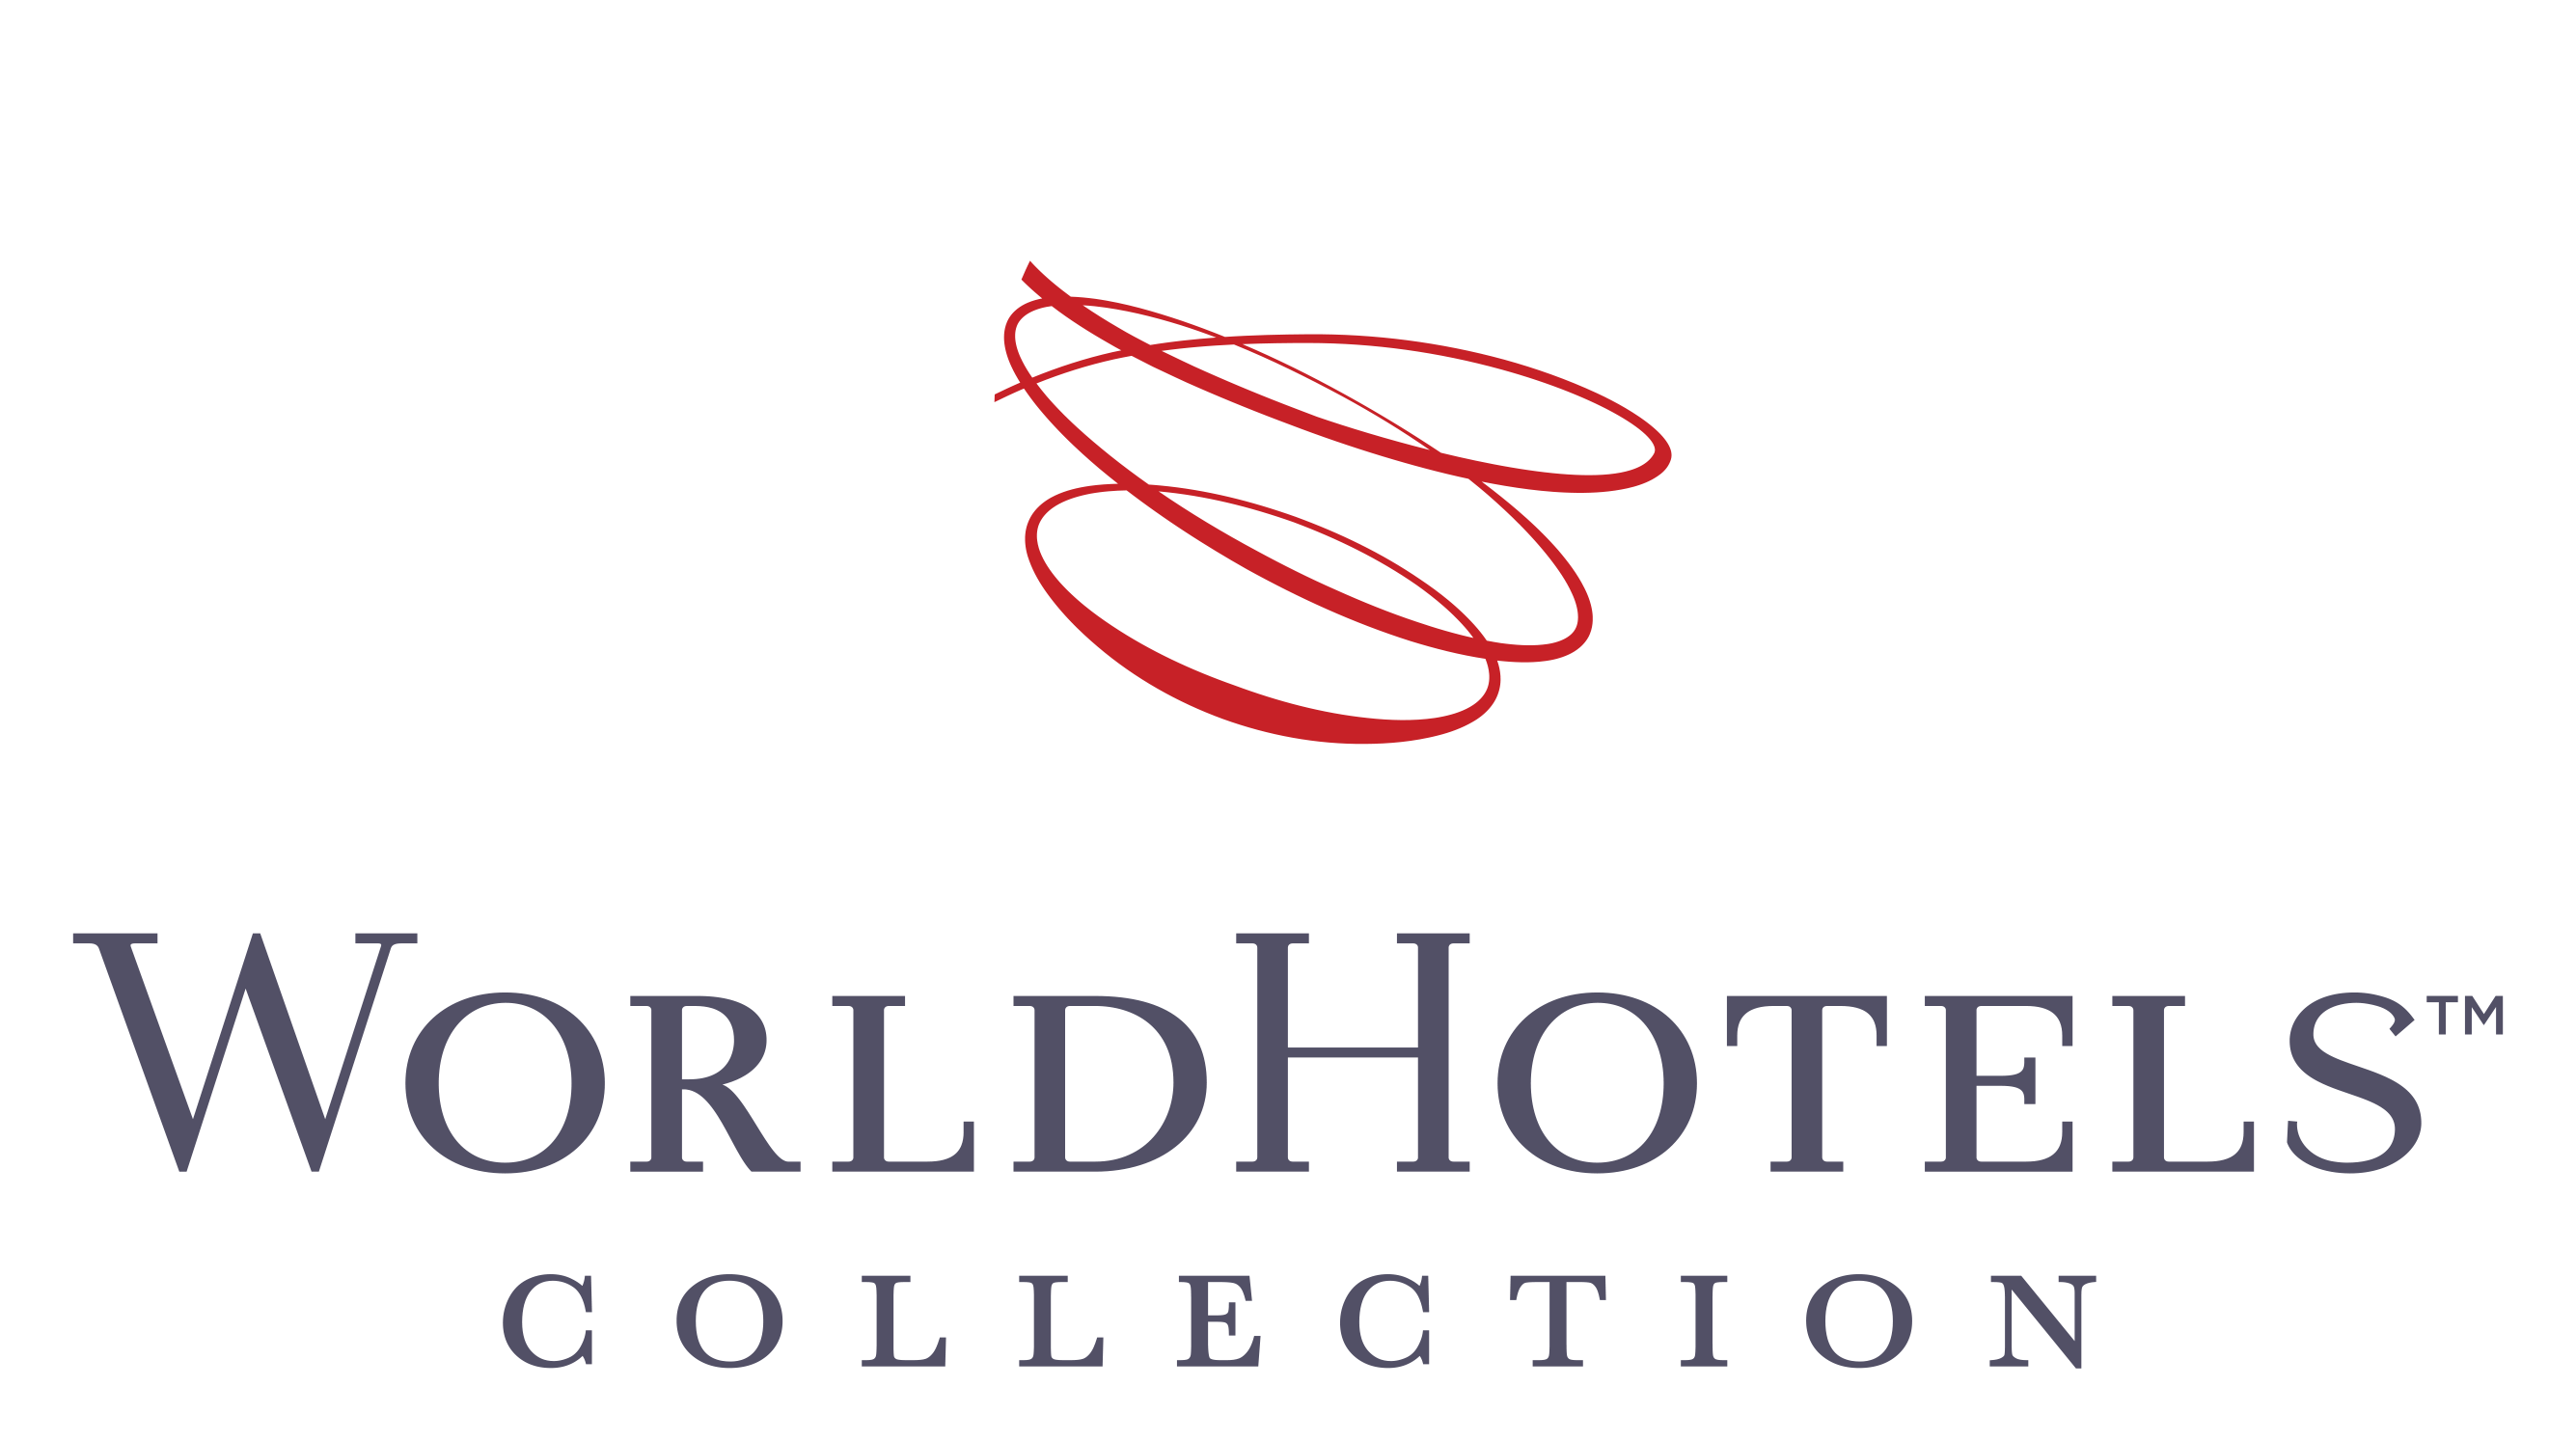 World Hotels